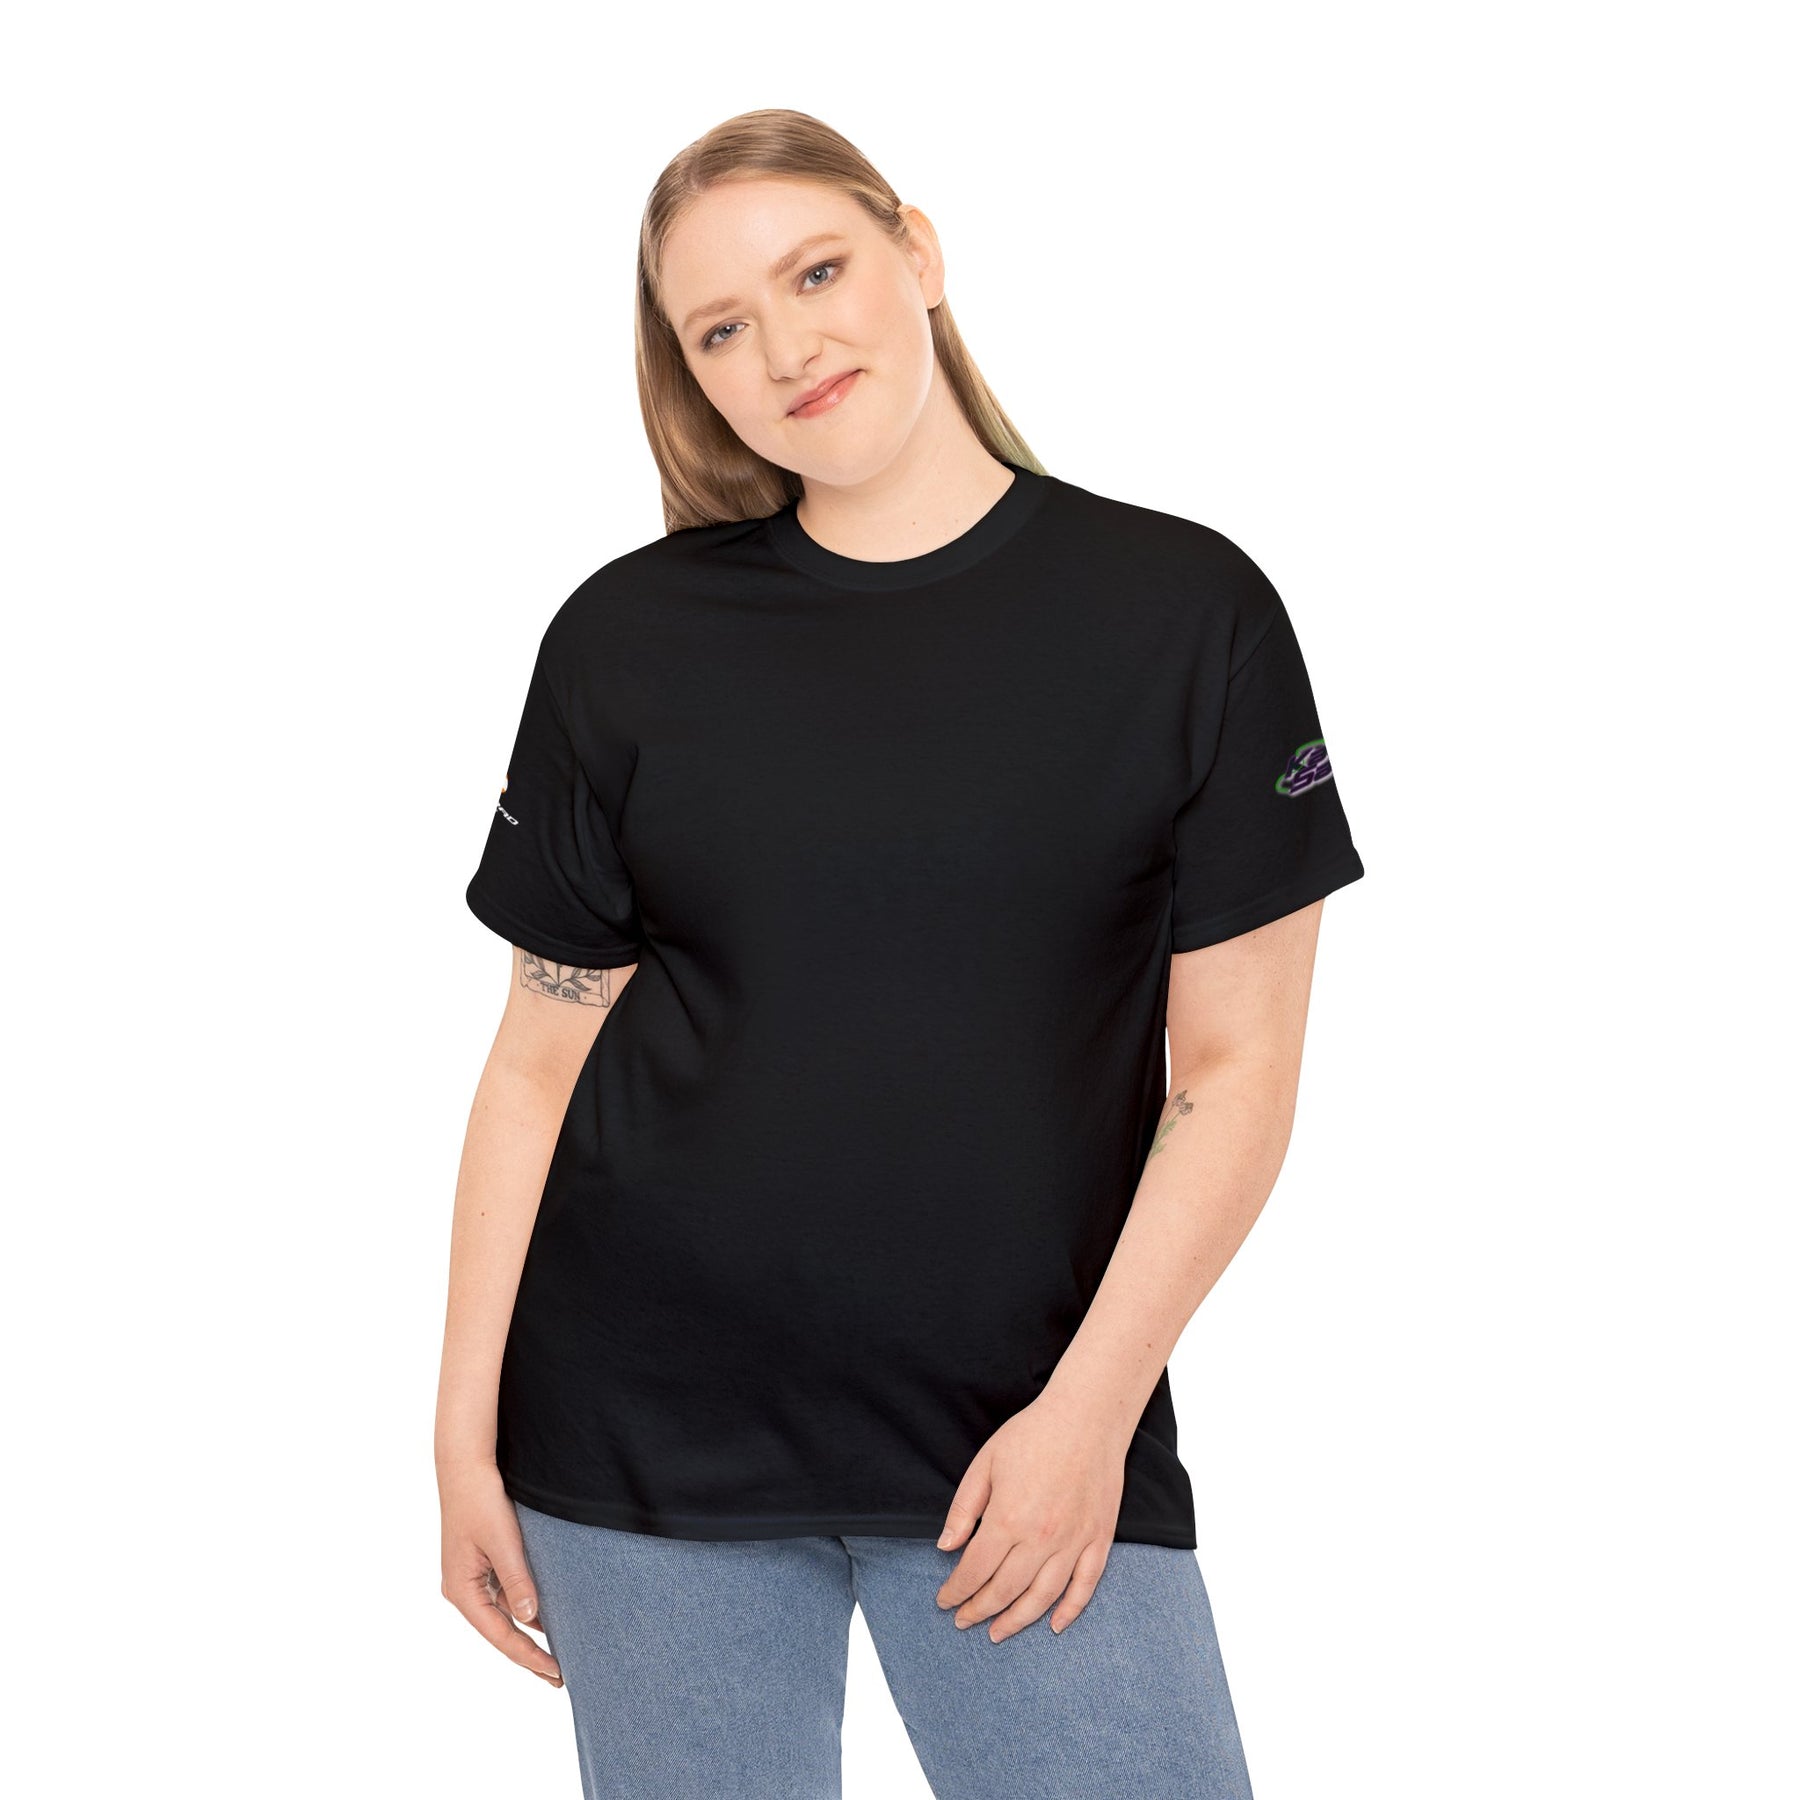 Braap Support T-Shirt Variante 1.5